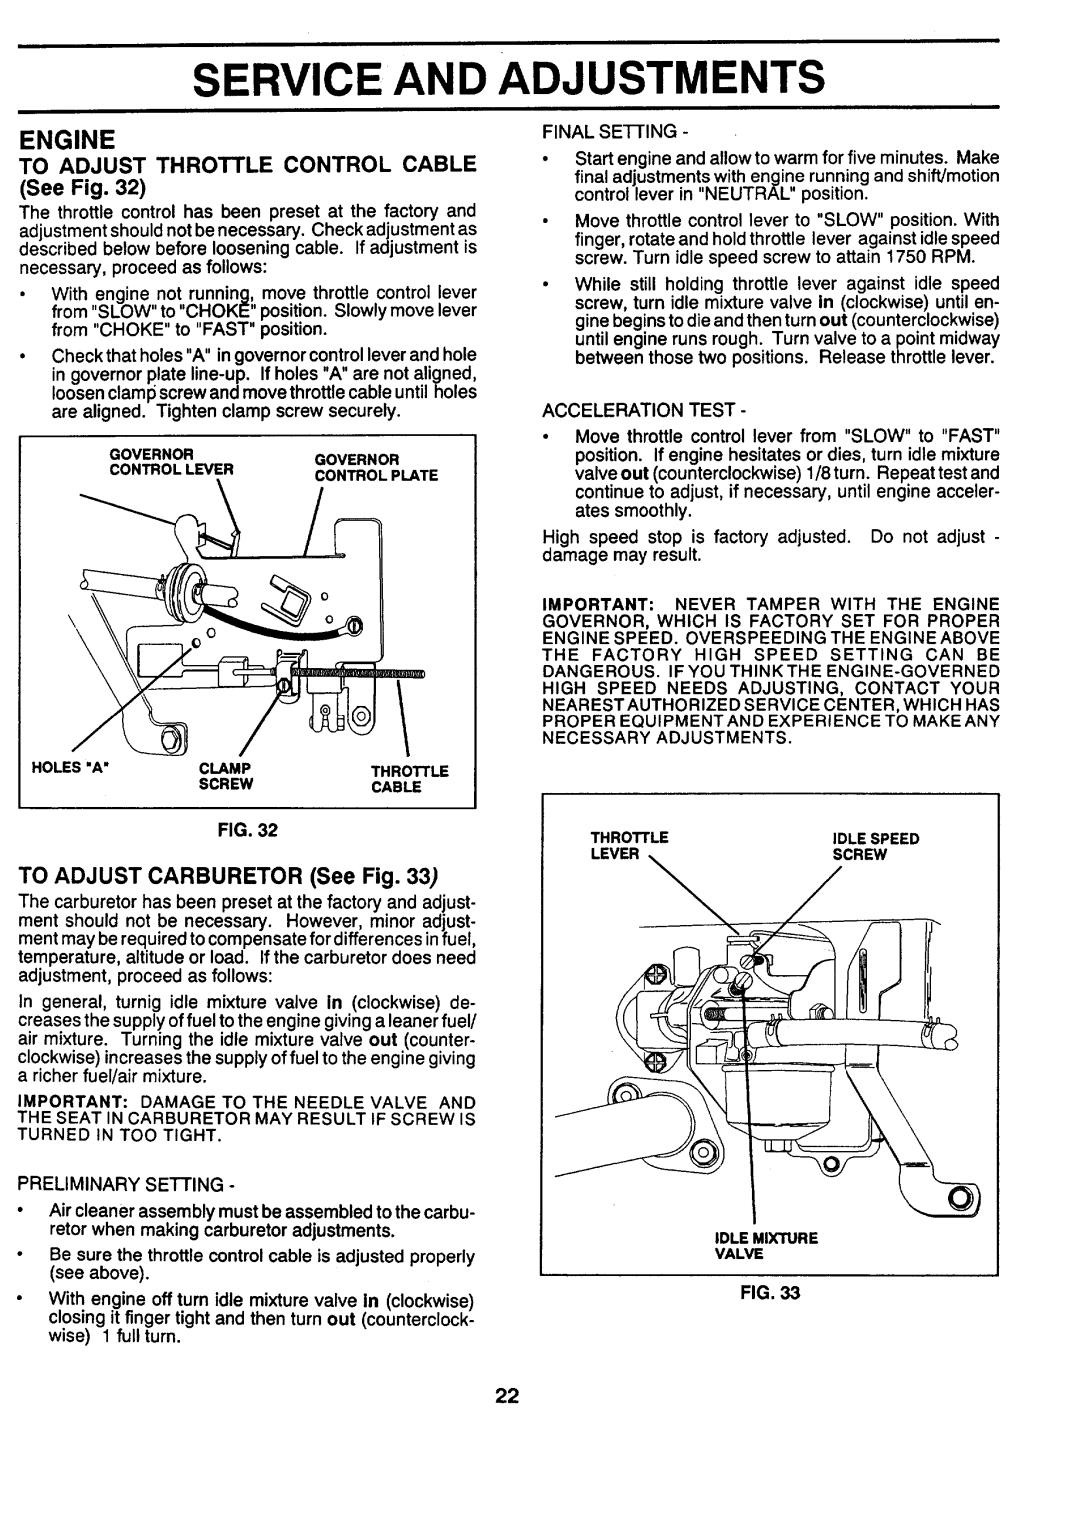 Sears 917.257462 manual Engine, TO ADJUST CARBURETOR See Fig, Service And Adjustments 